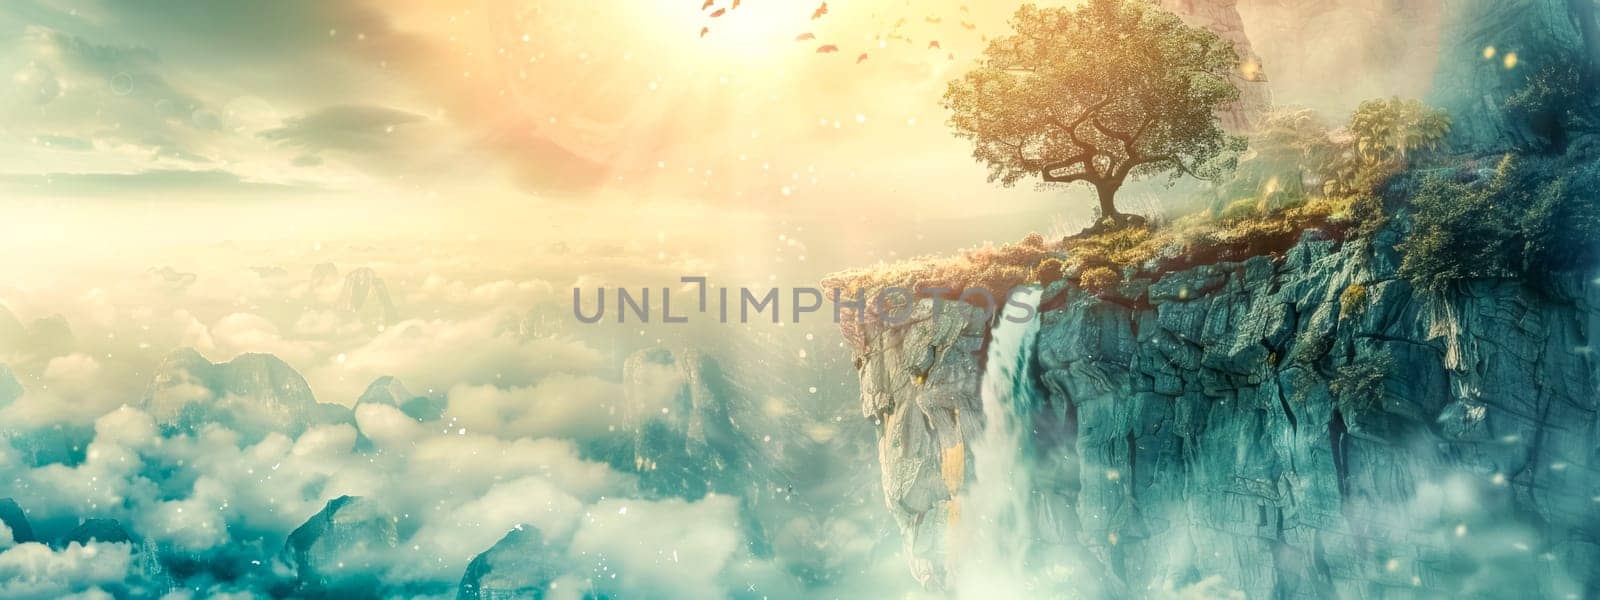 Mystical cliffside tree overlooking a dreamy landscape by Edophoto